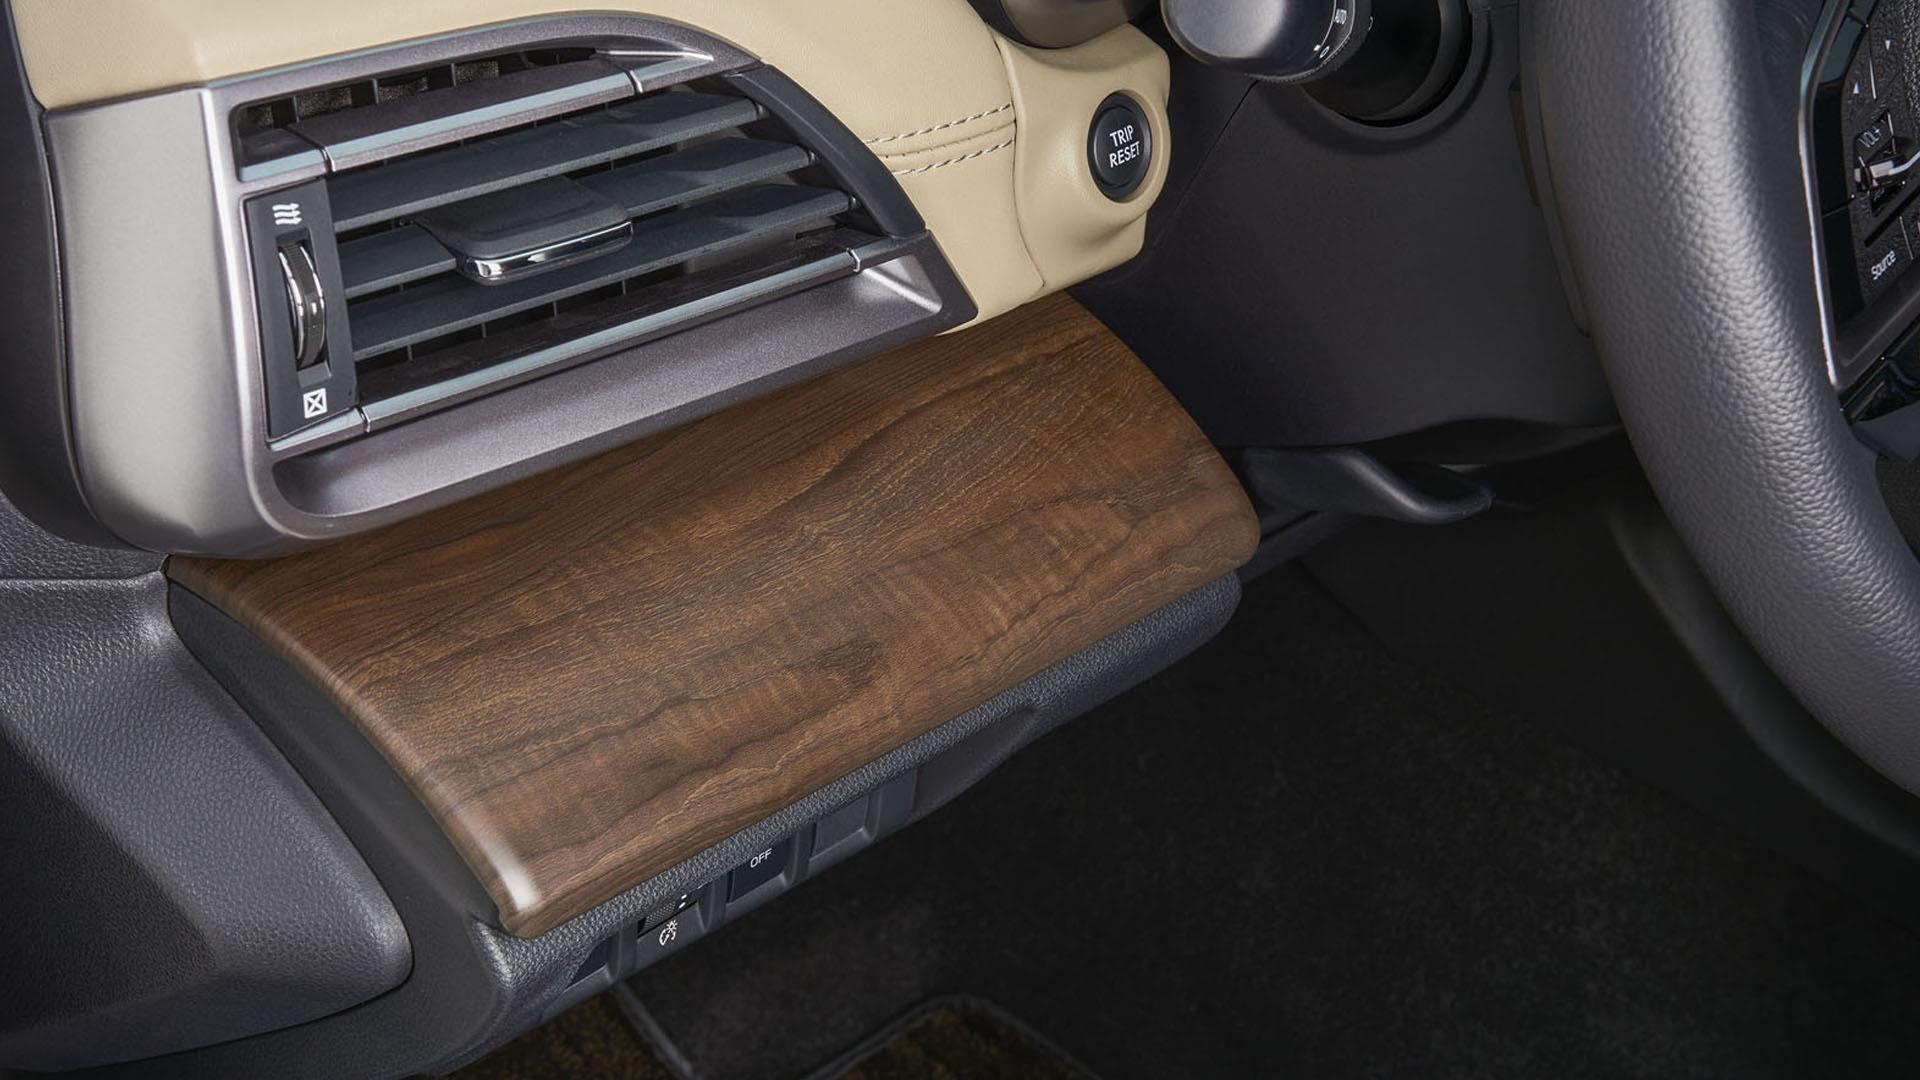 2022 Subaru Forester Interior Trim Kit Woodgrain. Upgrade your